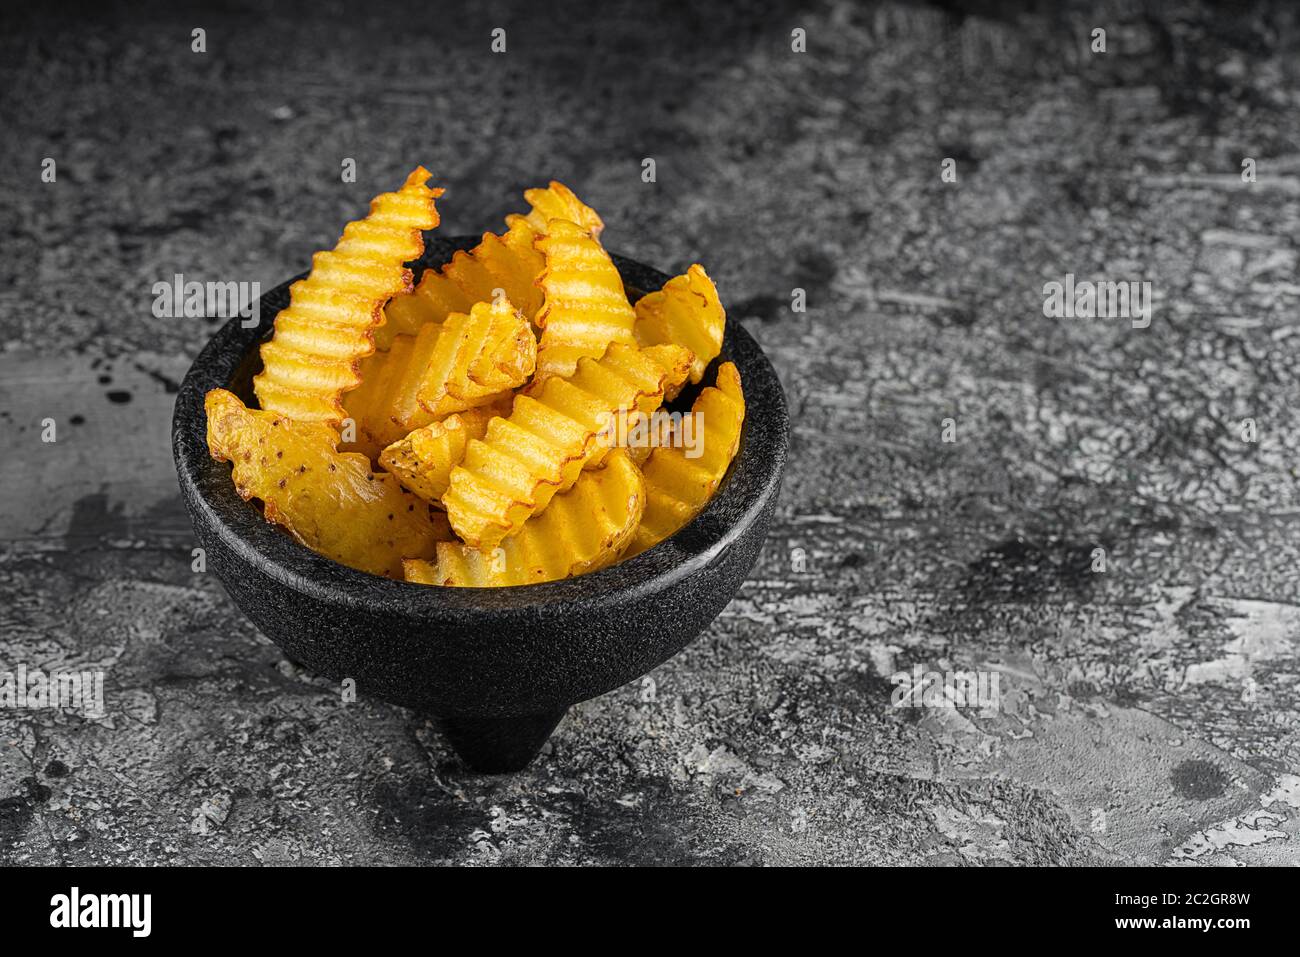 Baked potato fries on wooden table Stock Photo